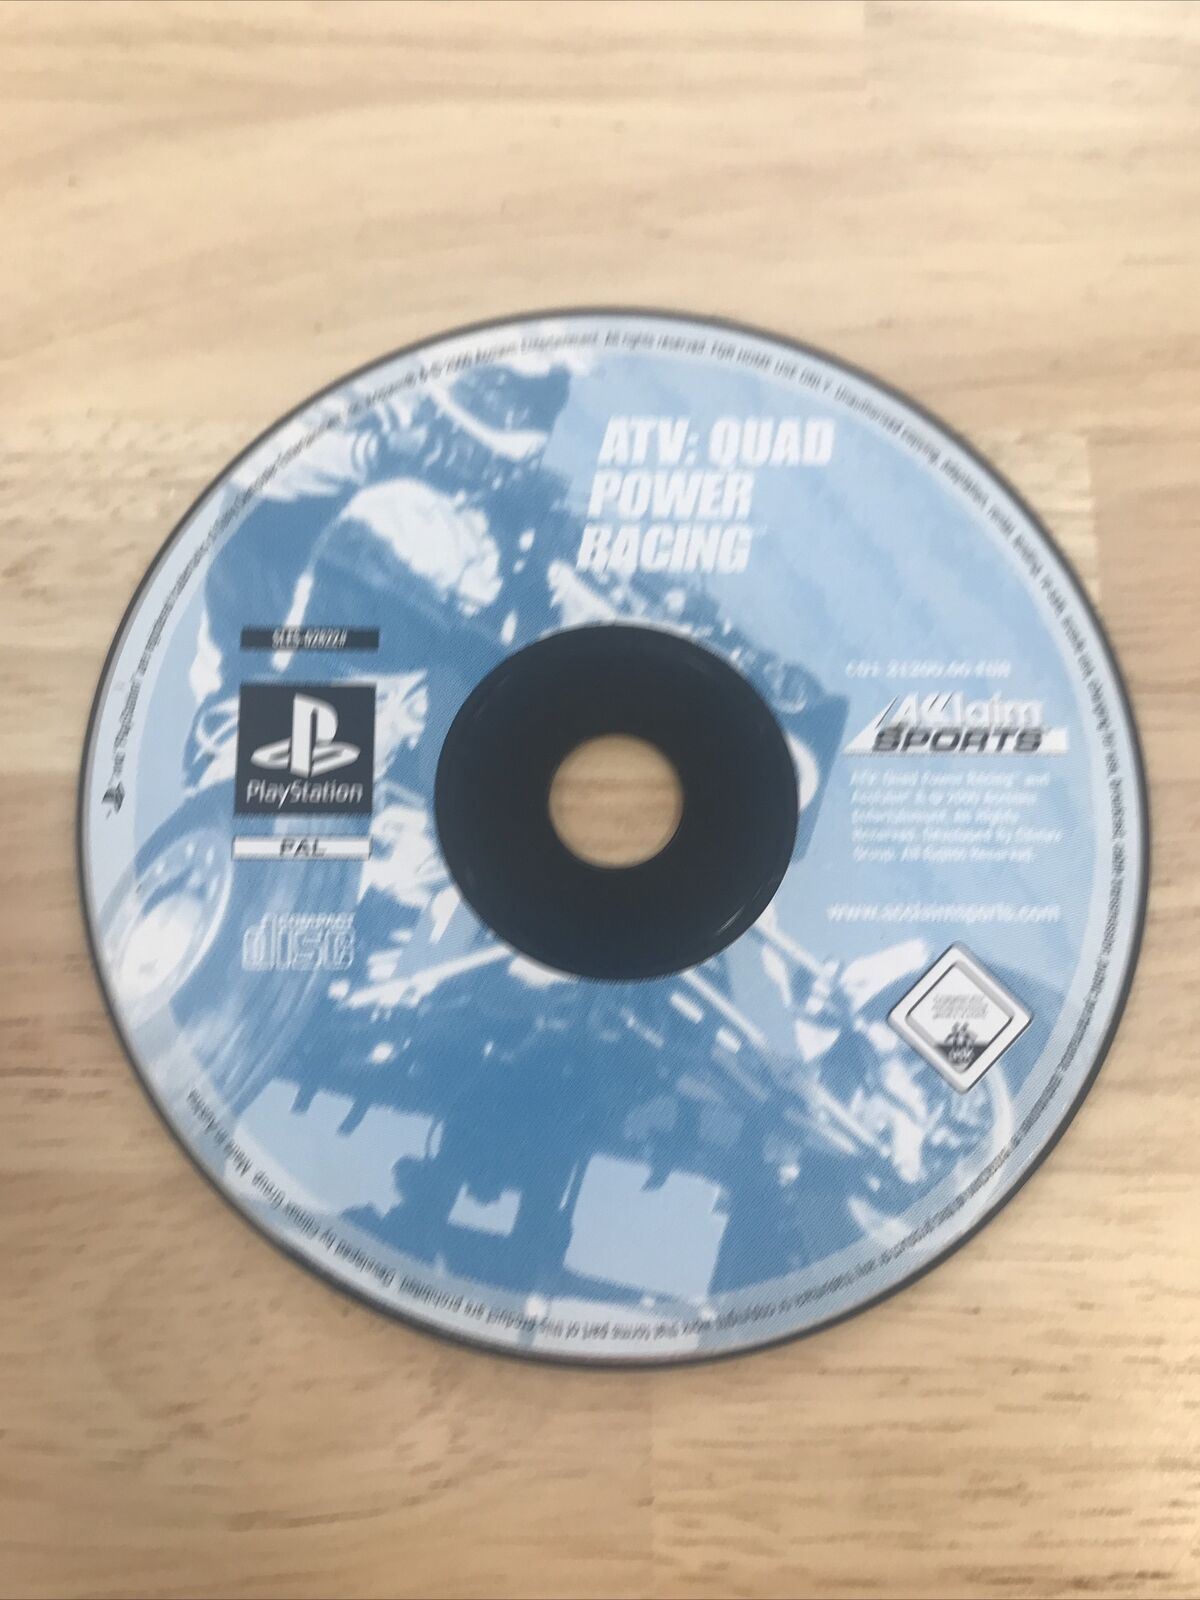 Atv Quad Power Racing - PlayStation 1 (Ps1) Cd Seul